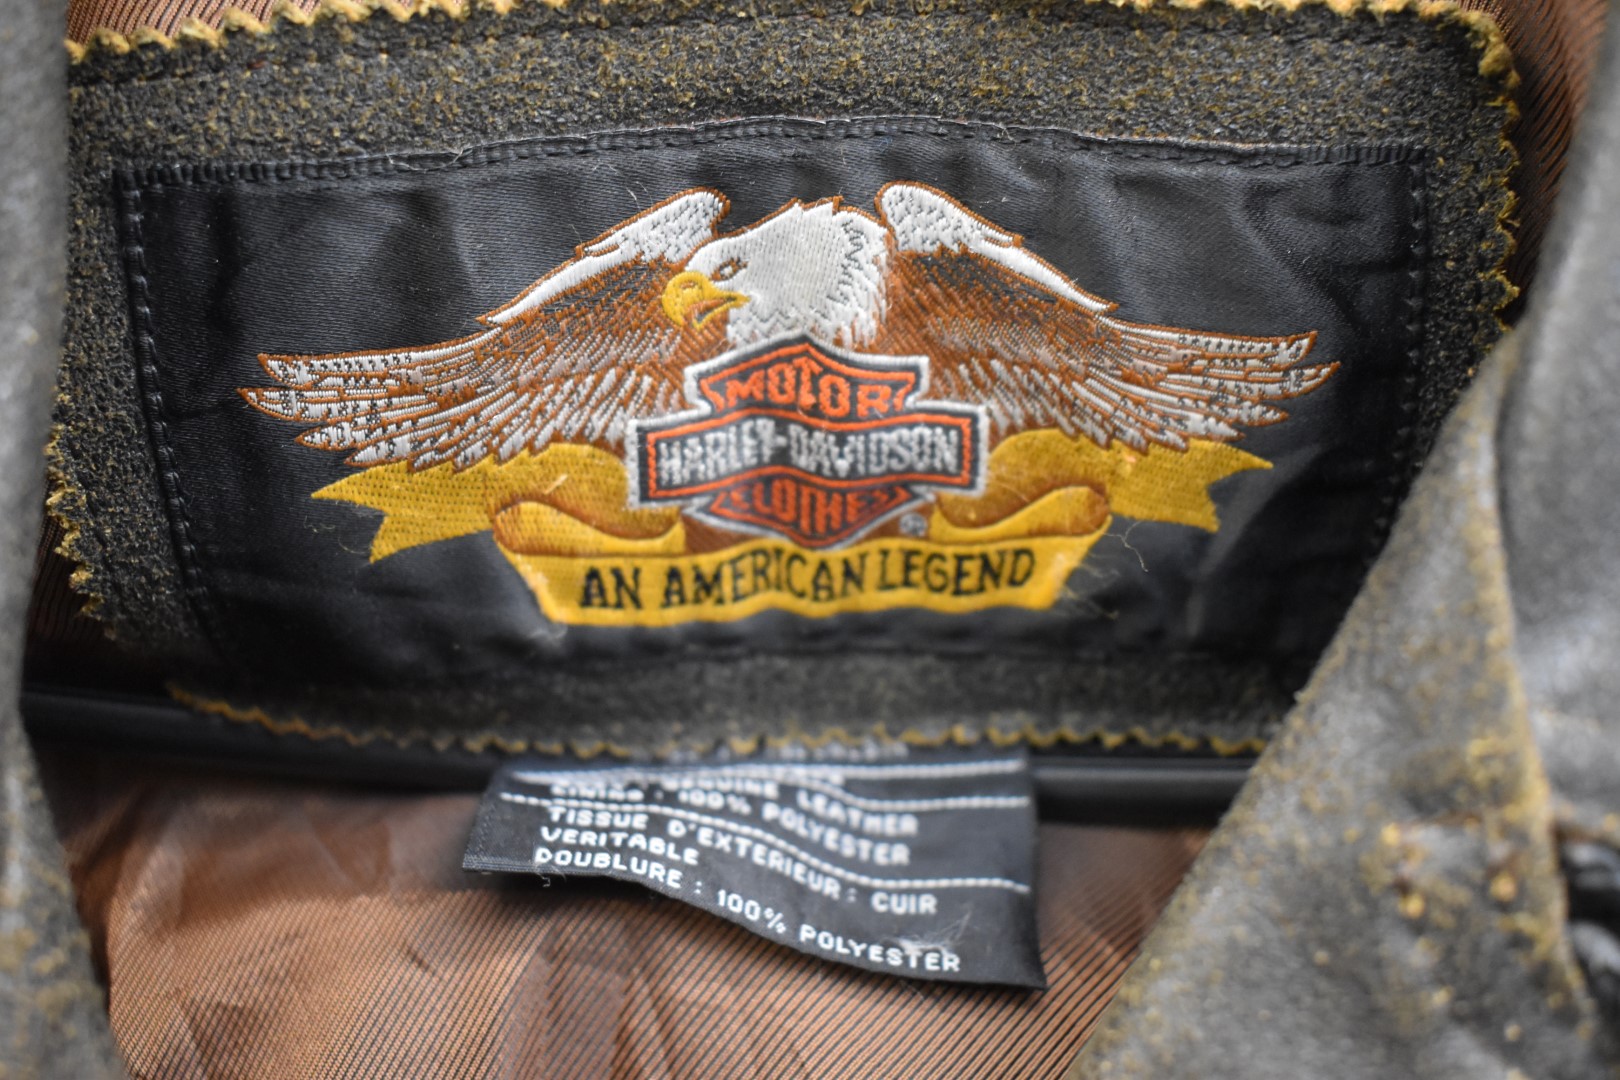 Vintage Harley Davidson leather motorcycle jacket, size M - Image 2 of 3